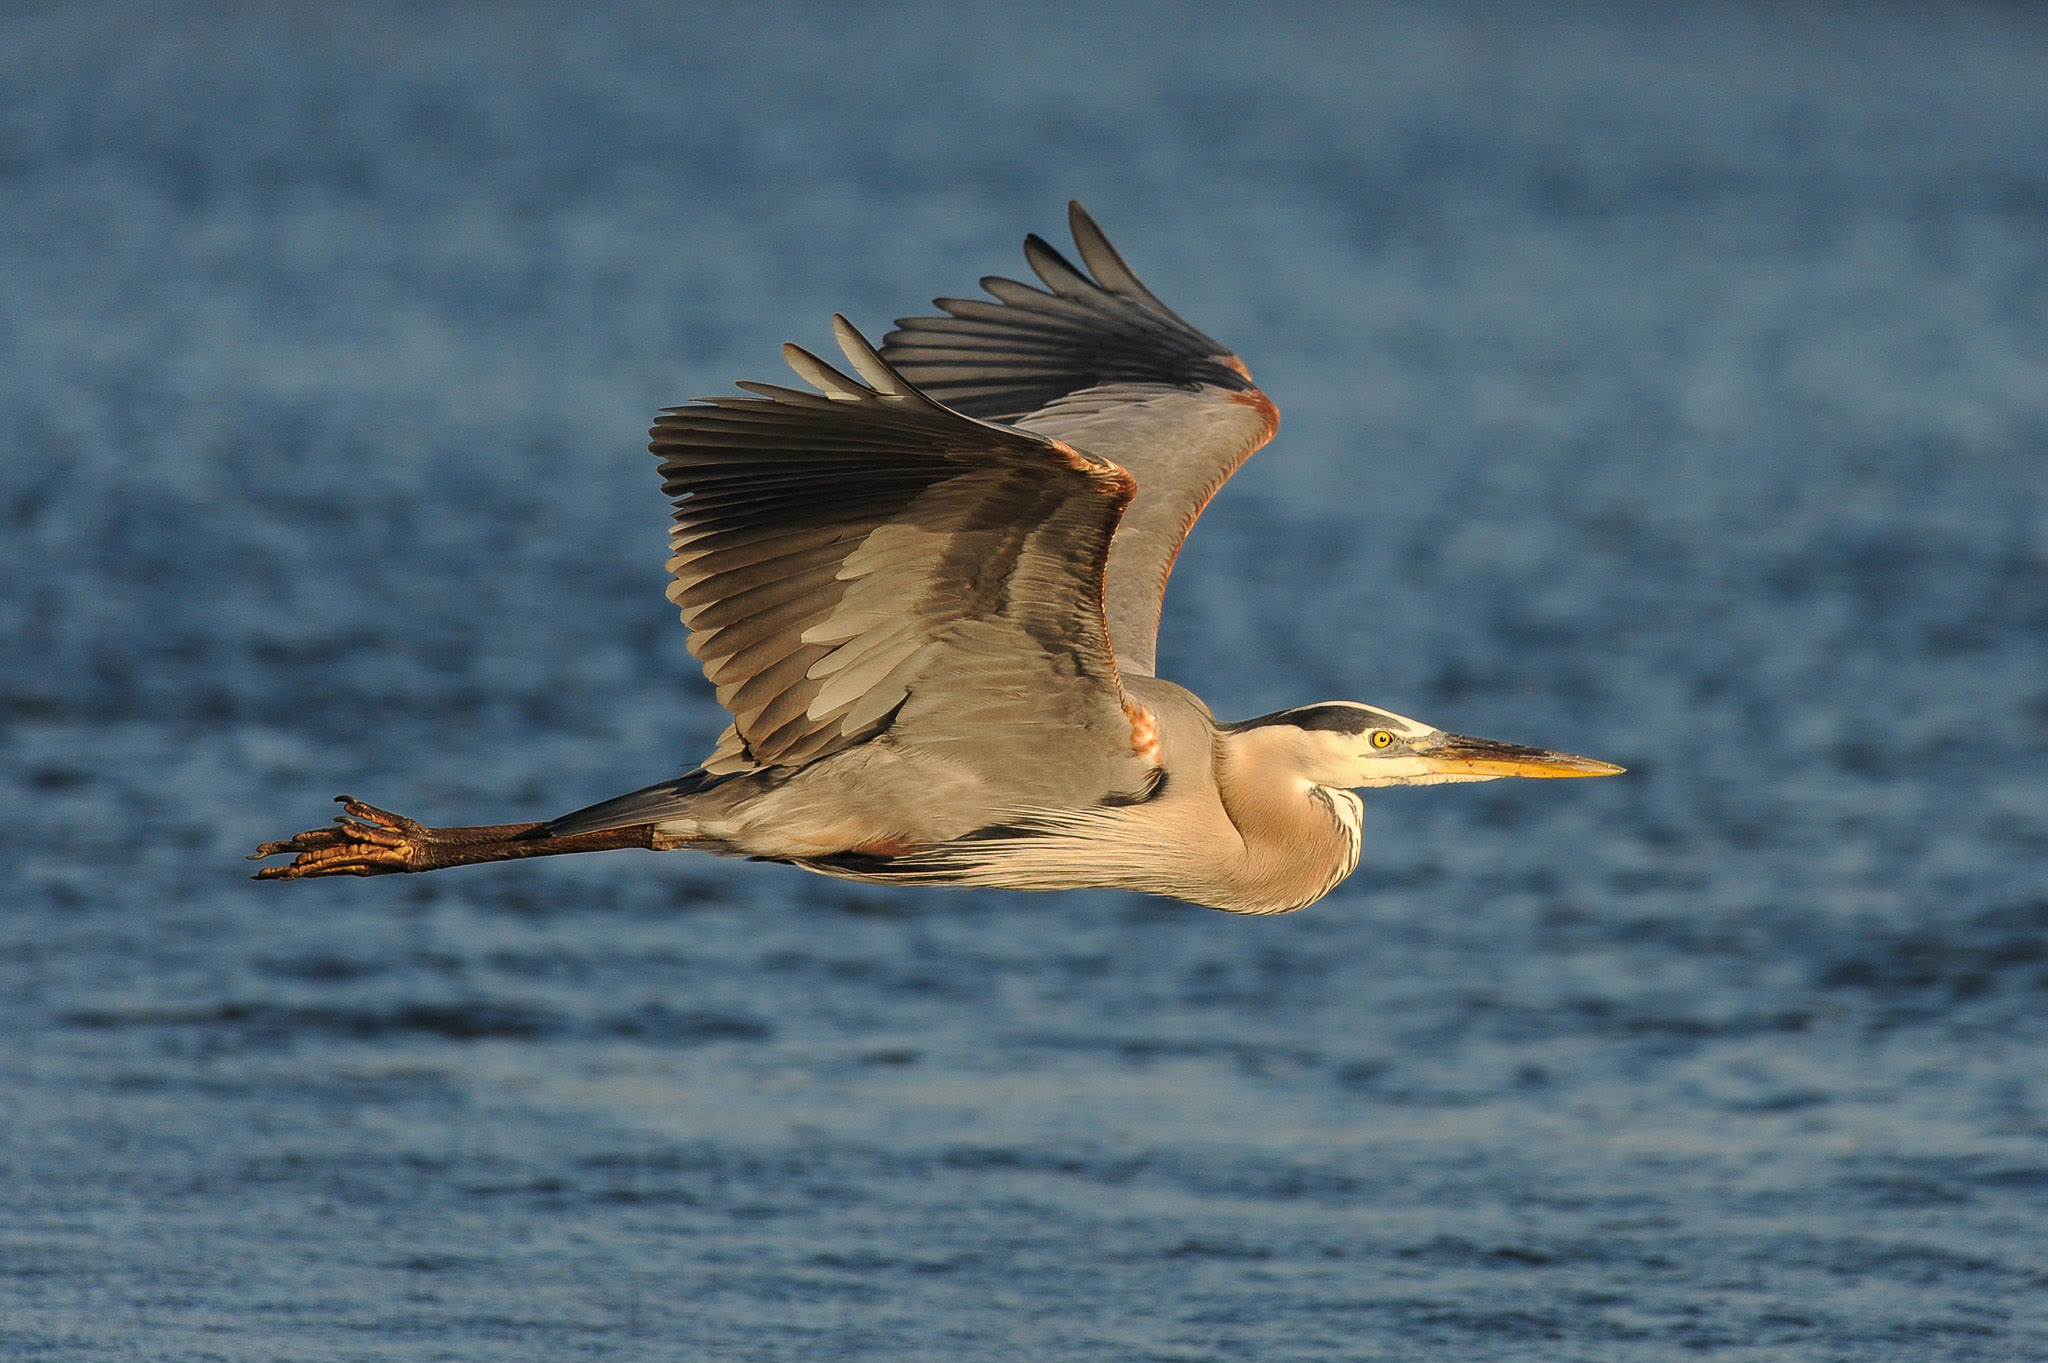 https://photographylife.com/wp-content/uploads/2014/02/Great-Blue-Heron-in-Flight.jpg